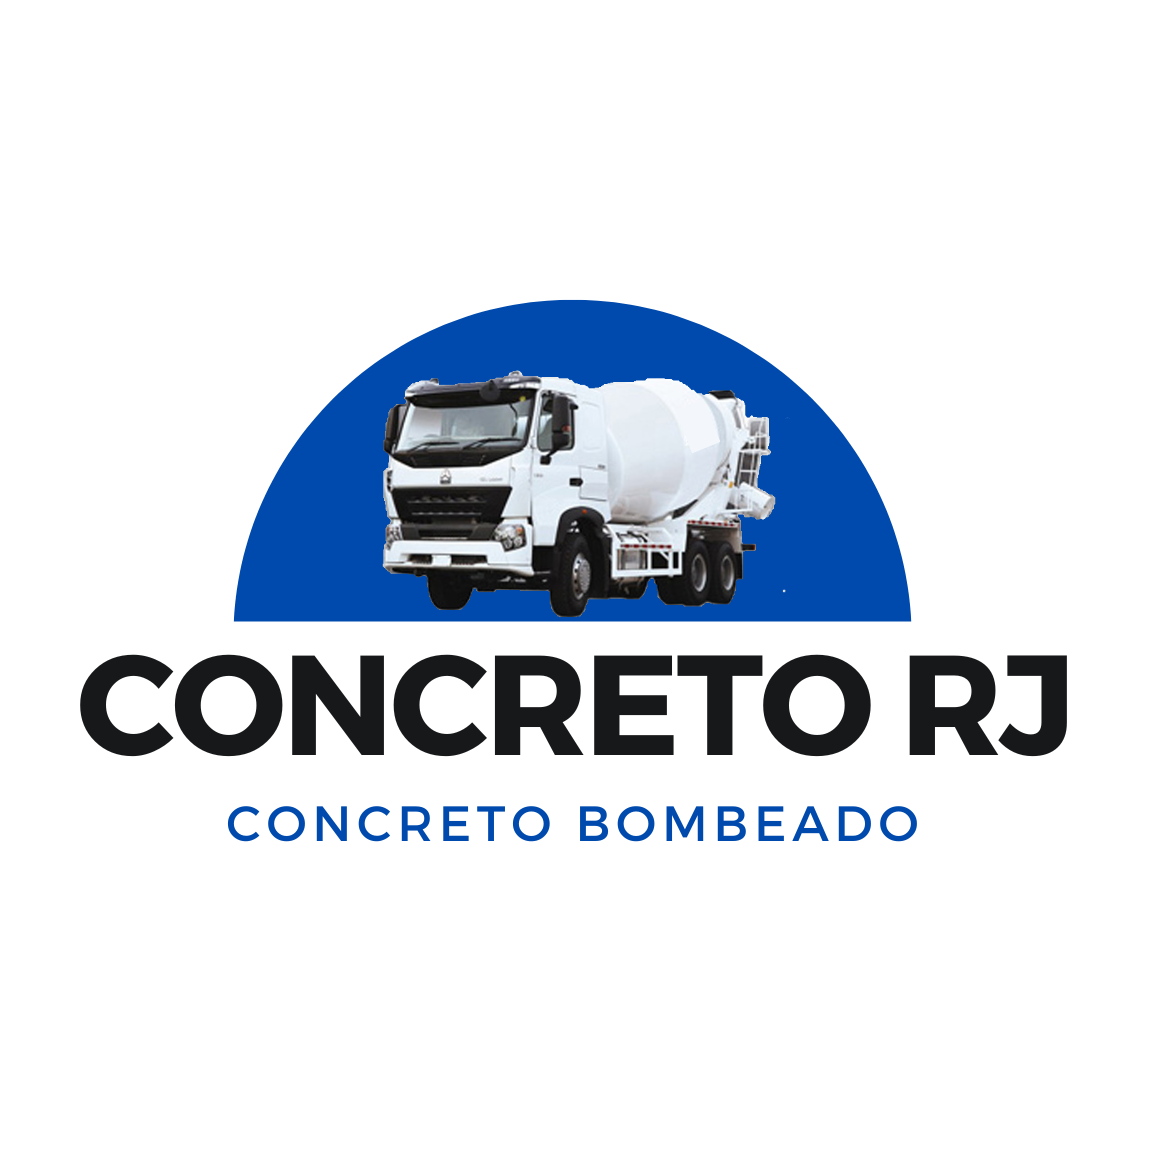 Concreto RJ - Concreto Bombeado Logo